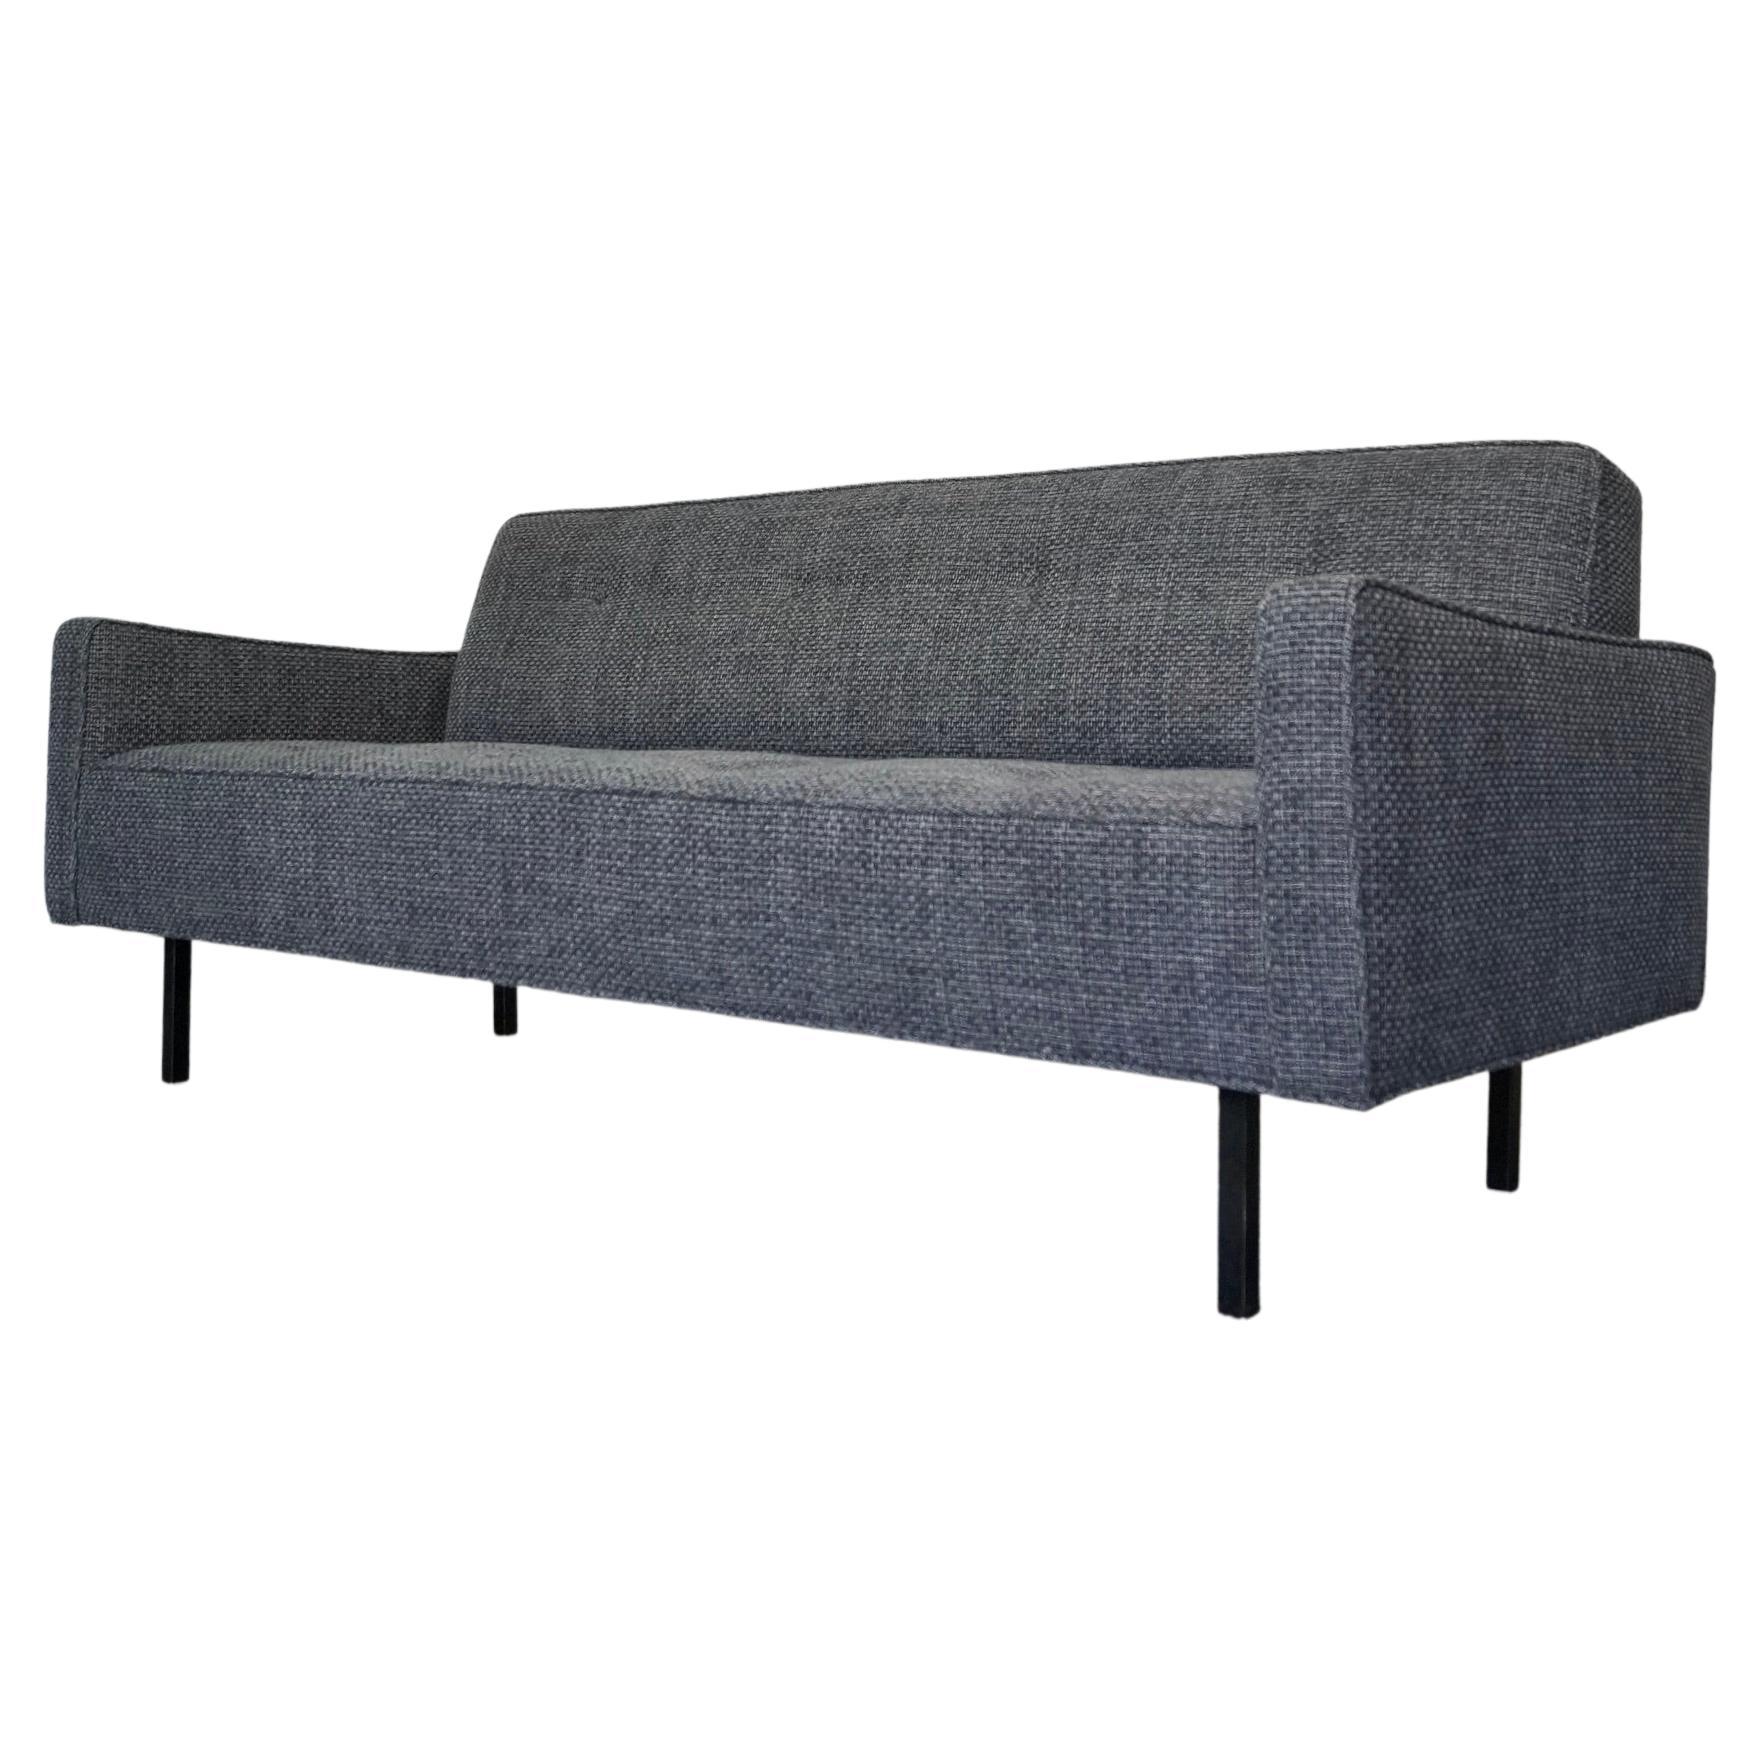 1960's Mid-Century Modern George Nelson Style Sofa